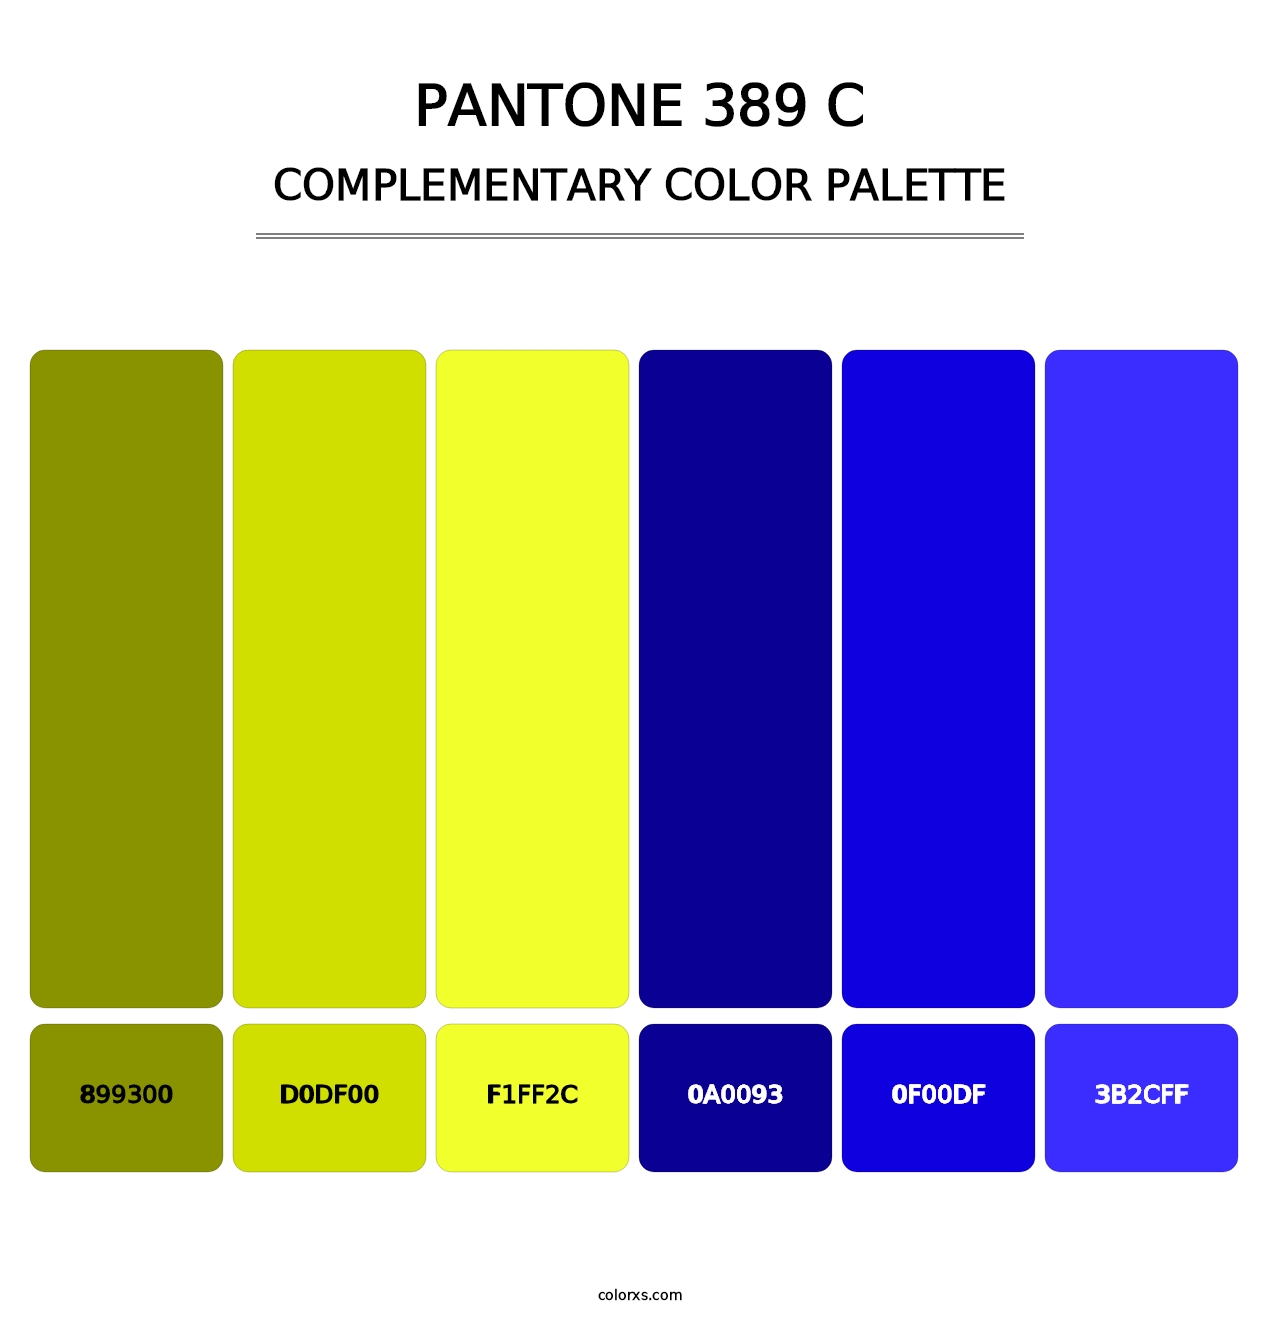 PANTONE 389 C - Complementary Color Palette